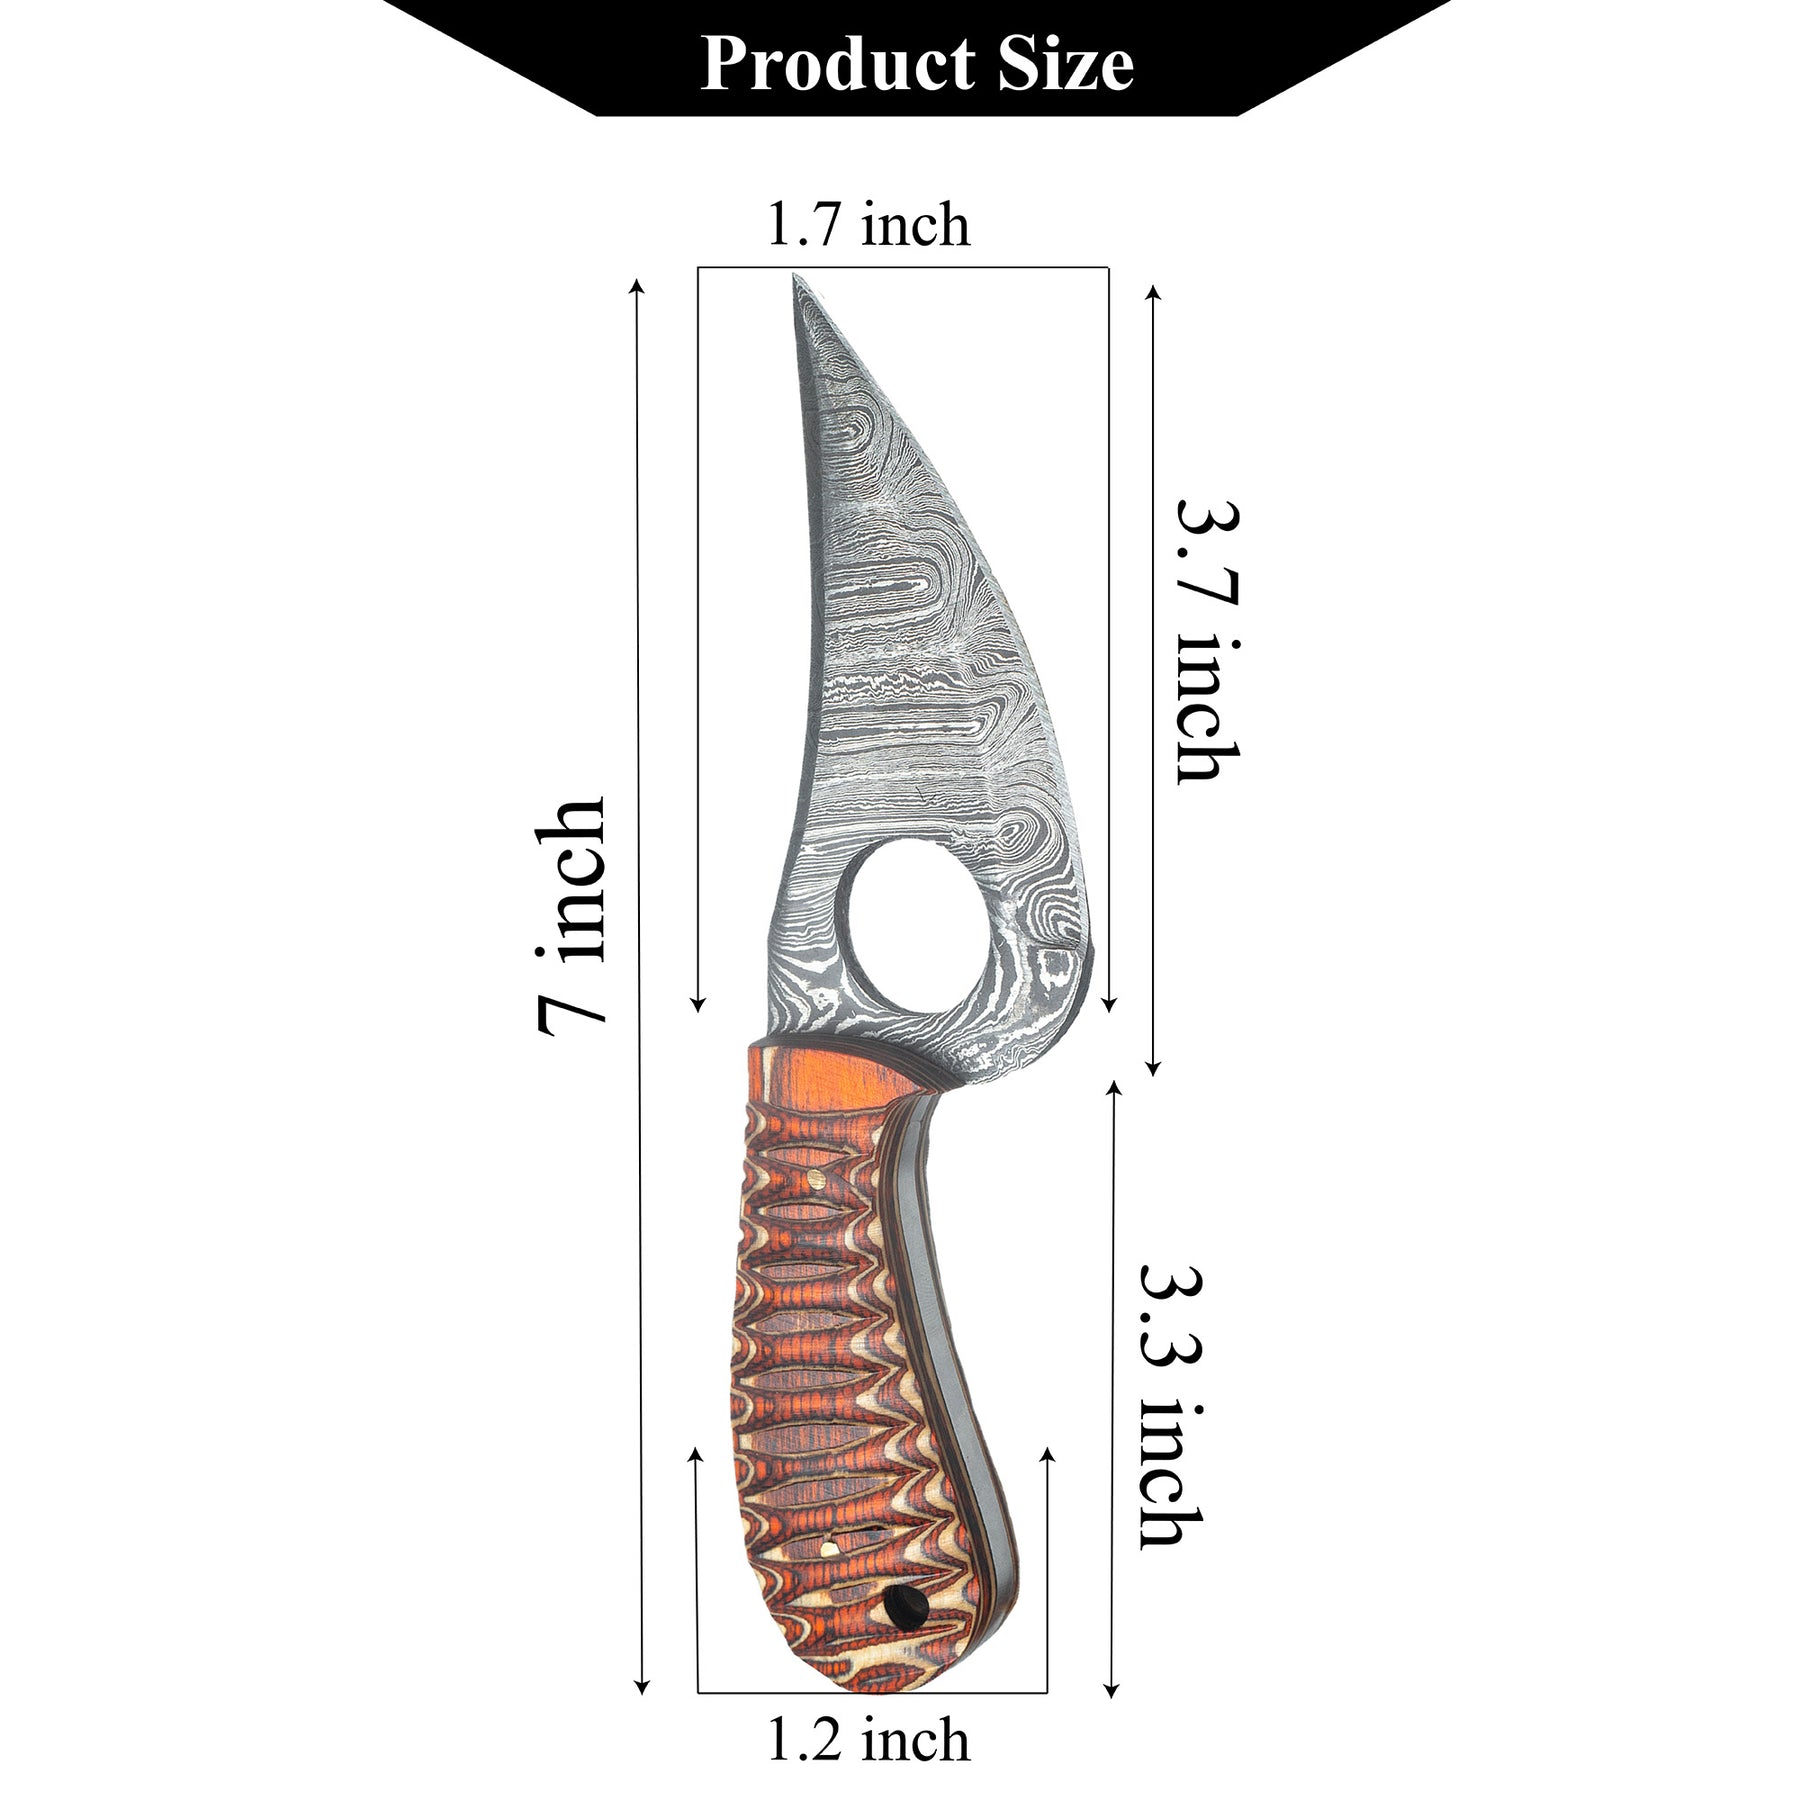 Custom Handmade Damascus Steel Hunting knife